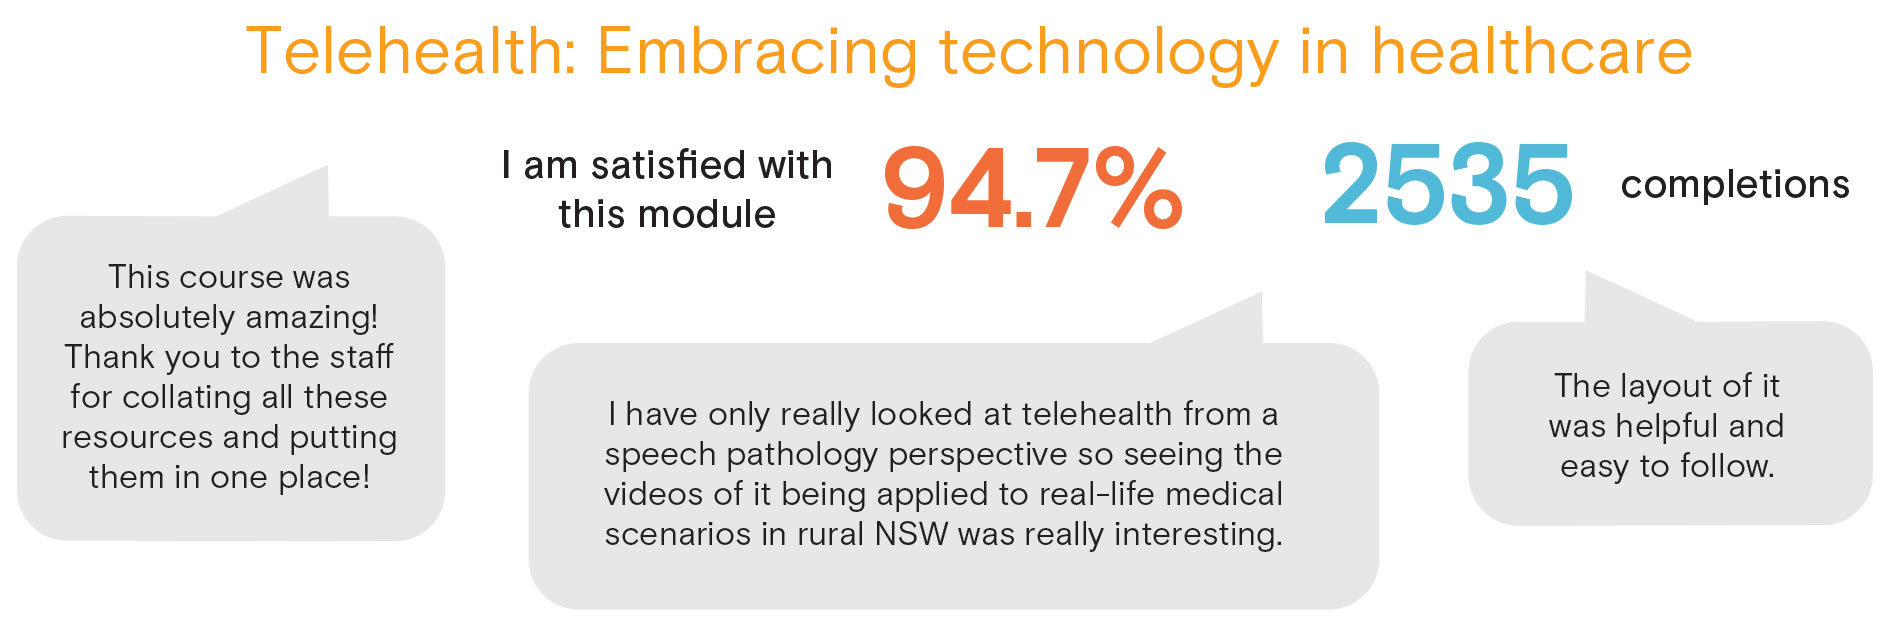 Telehealth: Embracing technology in healthcare - module feedback